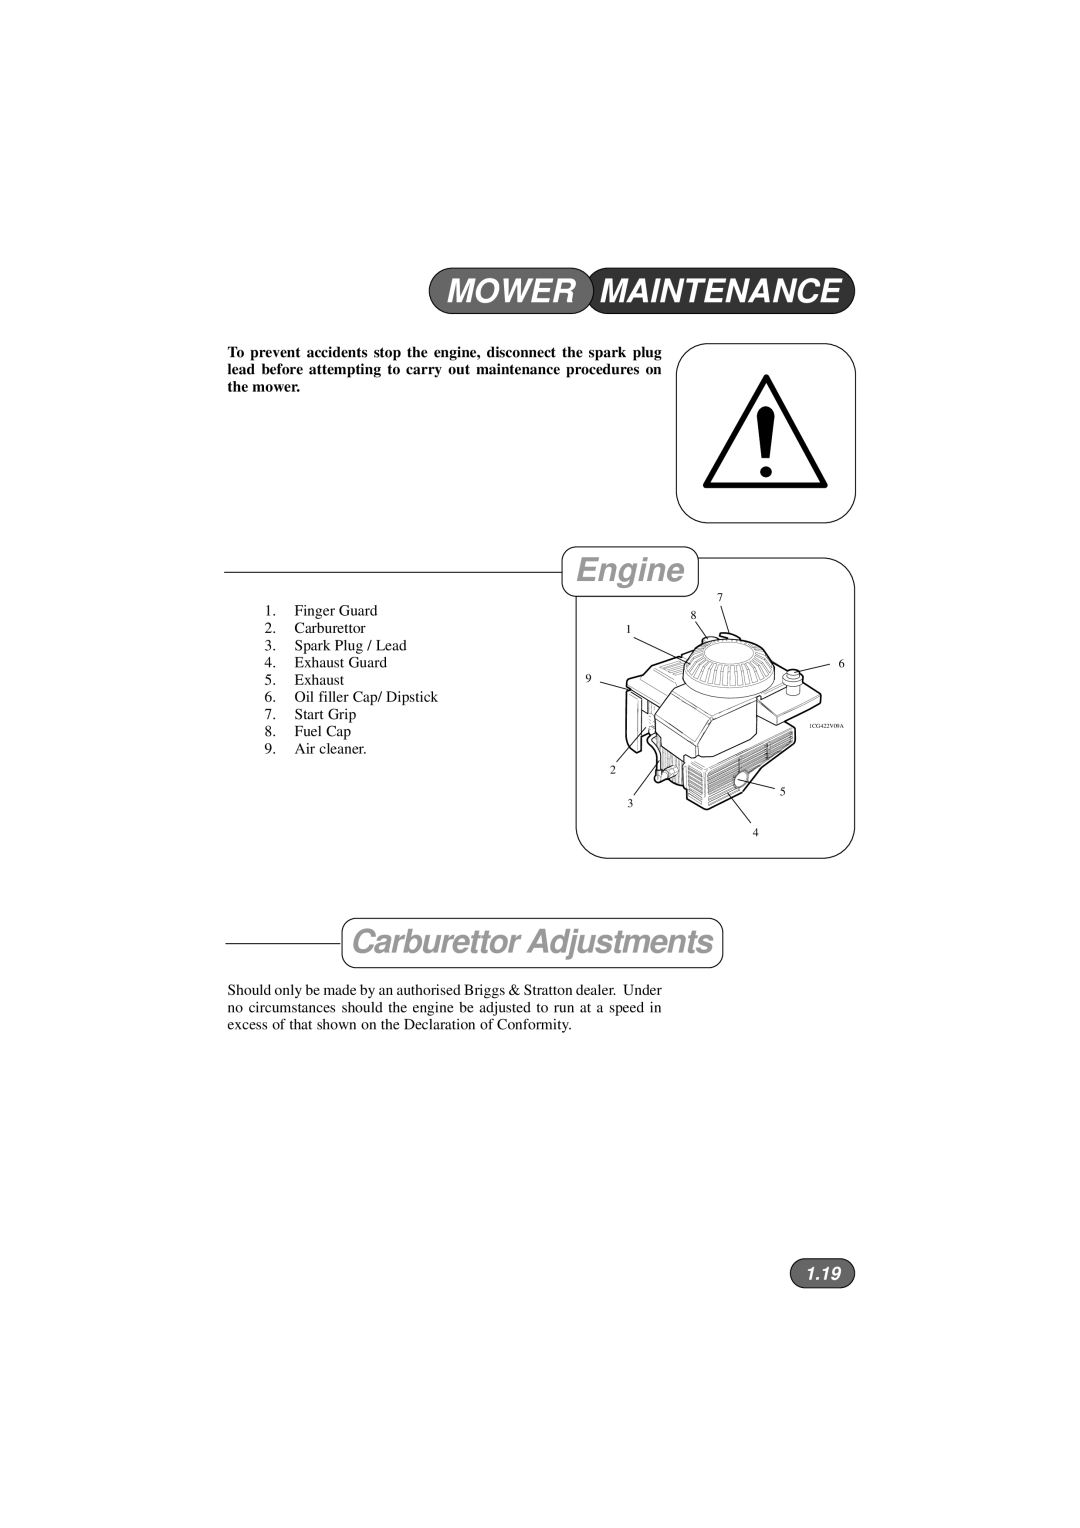 Hayter Mowers 423V, 422V, 424V manual Mower Maintenance, Engine, Carburettor Adjustments, 1.19 